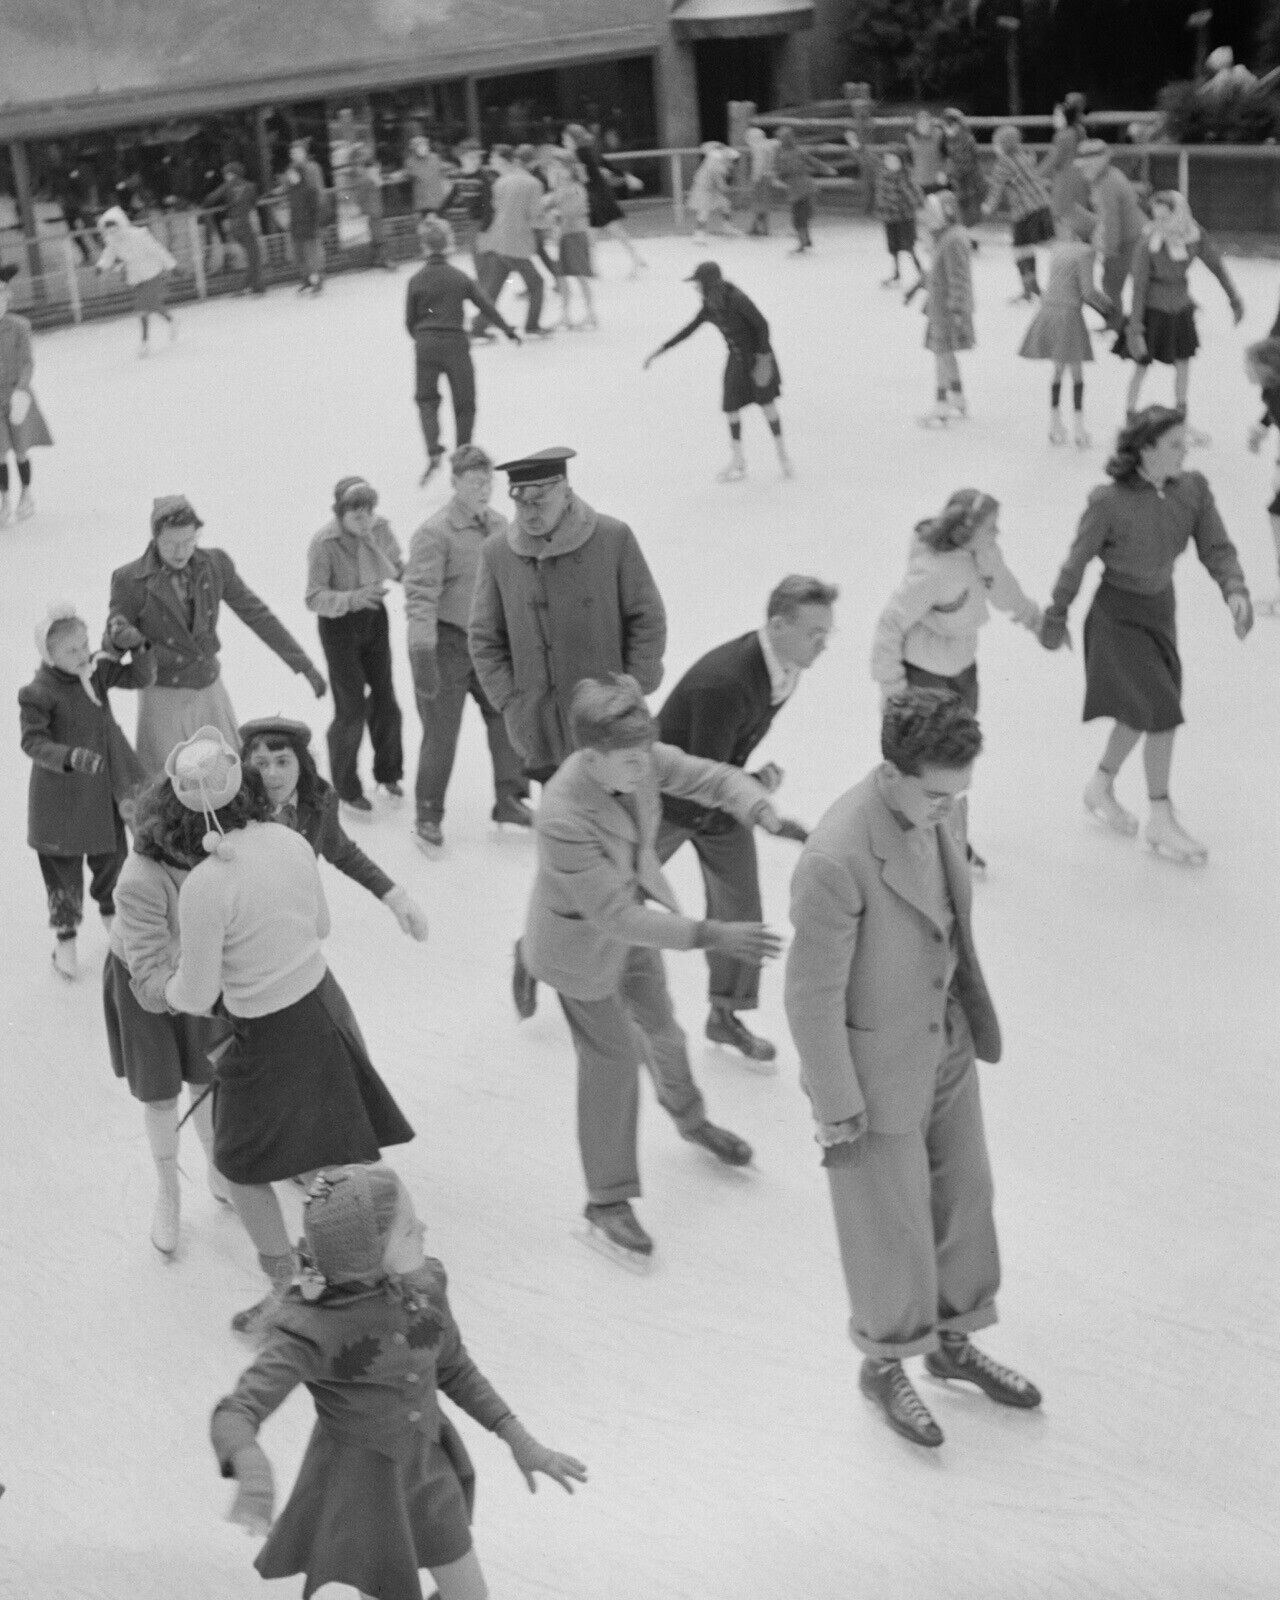 8x10 B&W Art Print 1941 Ice Skating At Rockefeller Center, NYC